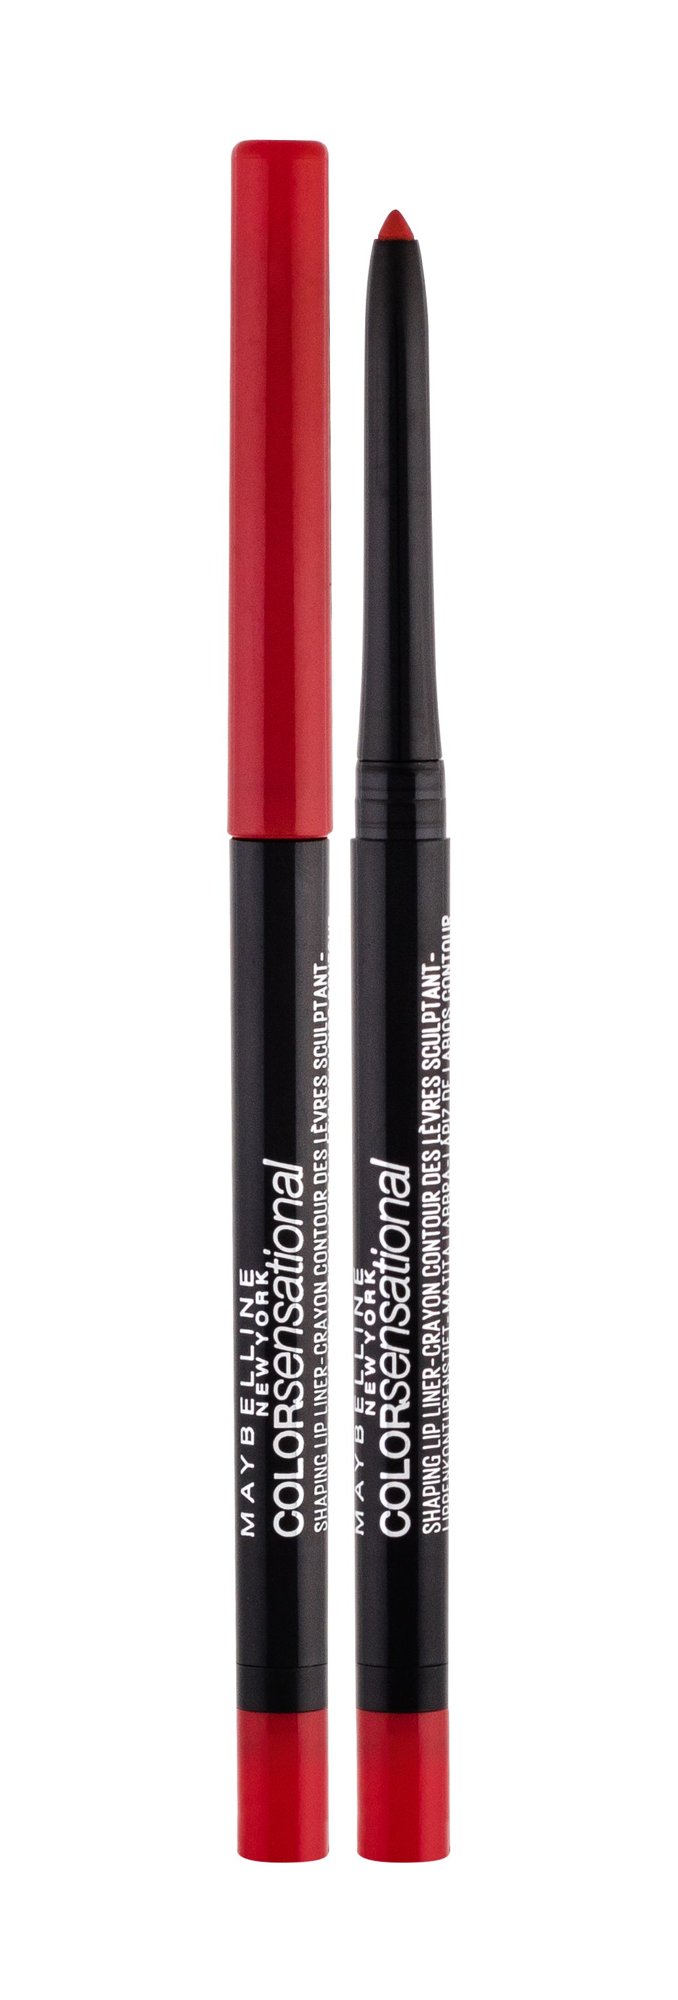 Maybelline Color Sensational lūpų pieštukas